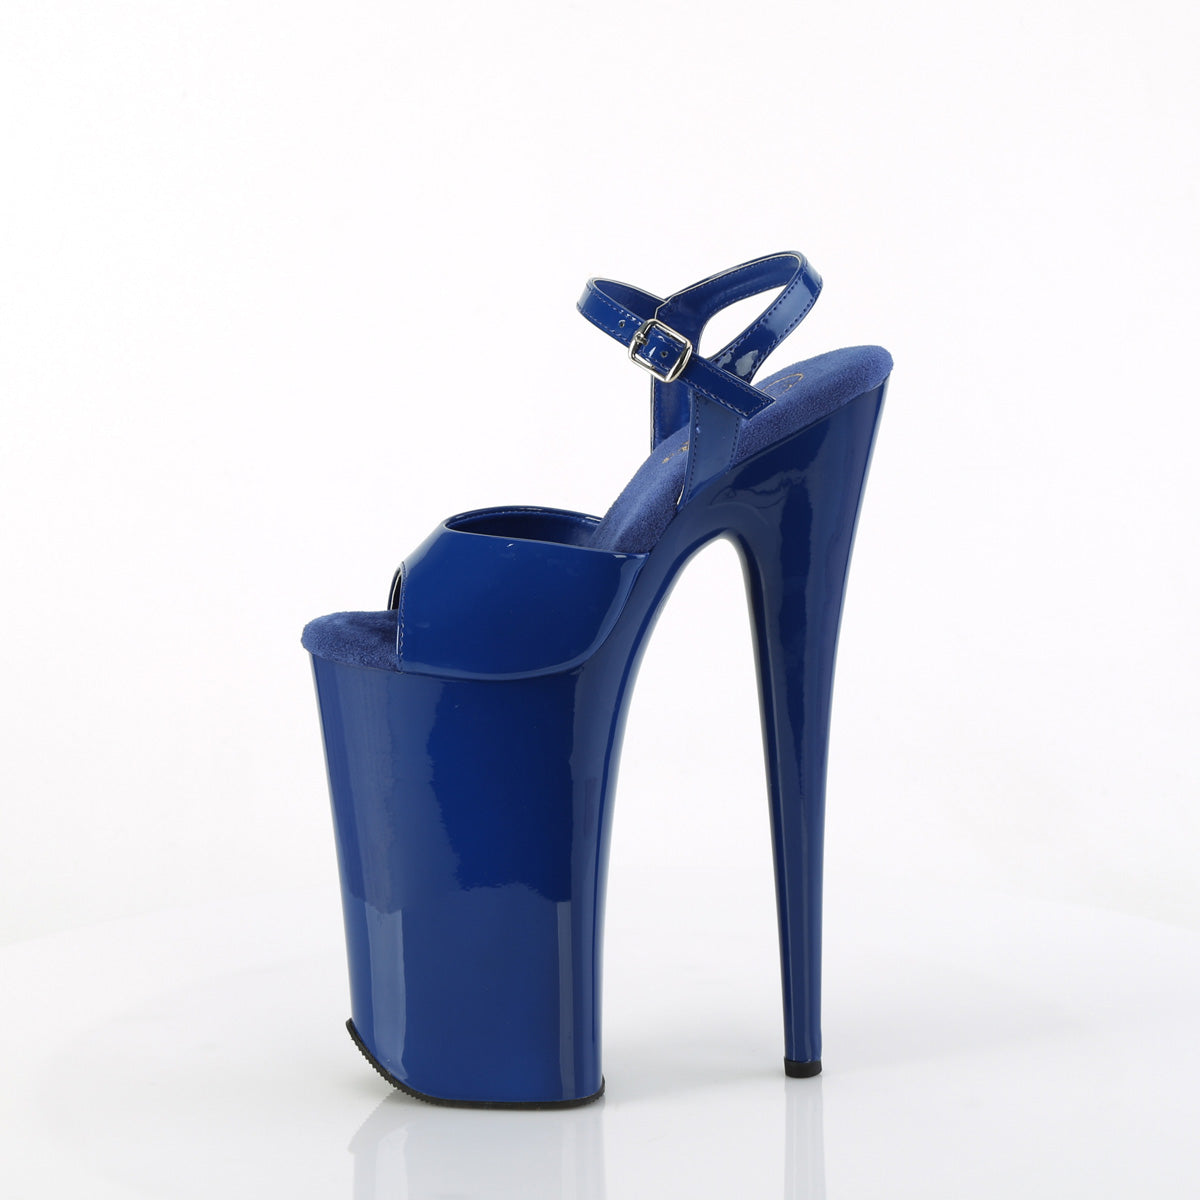 BEYOND-009 Royal Blue Sandals